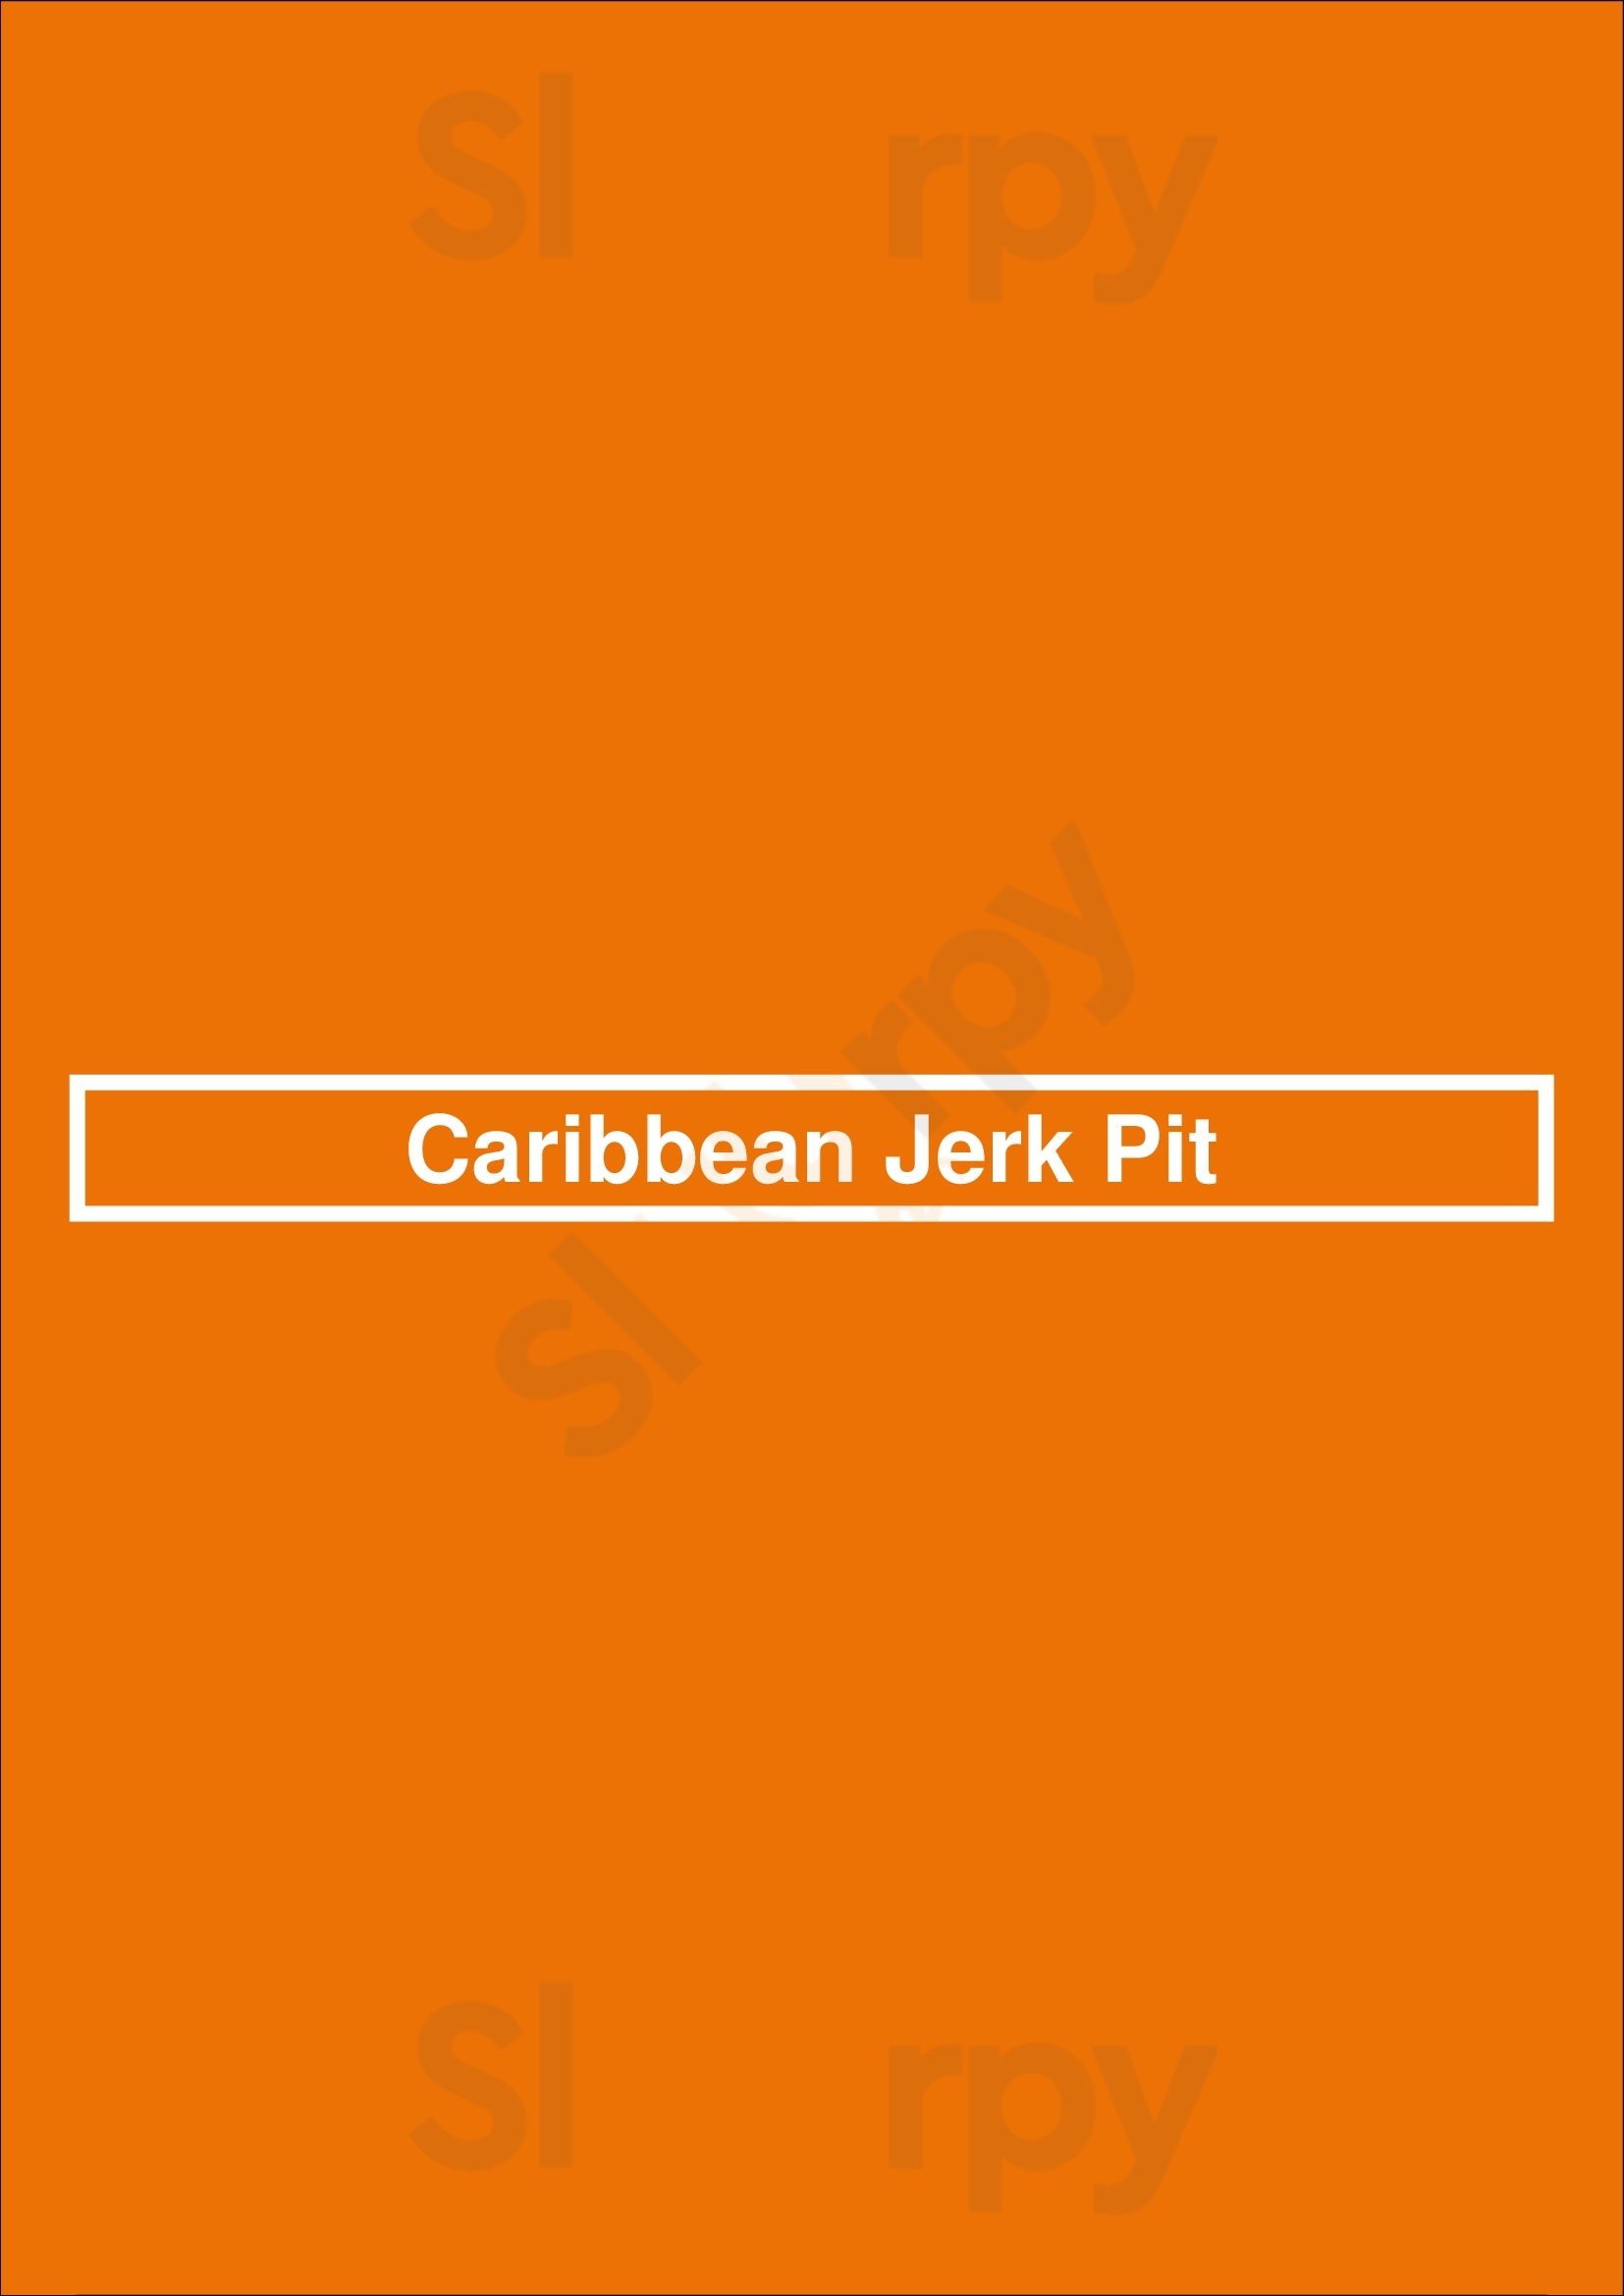 Caribbean Jerk Pit Richmond Hill Menu - 1